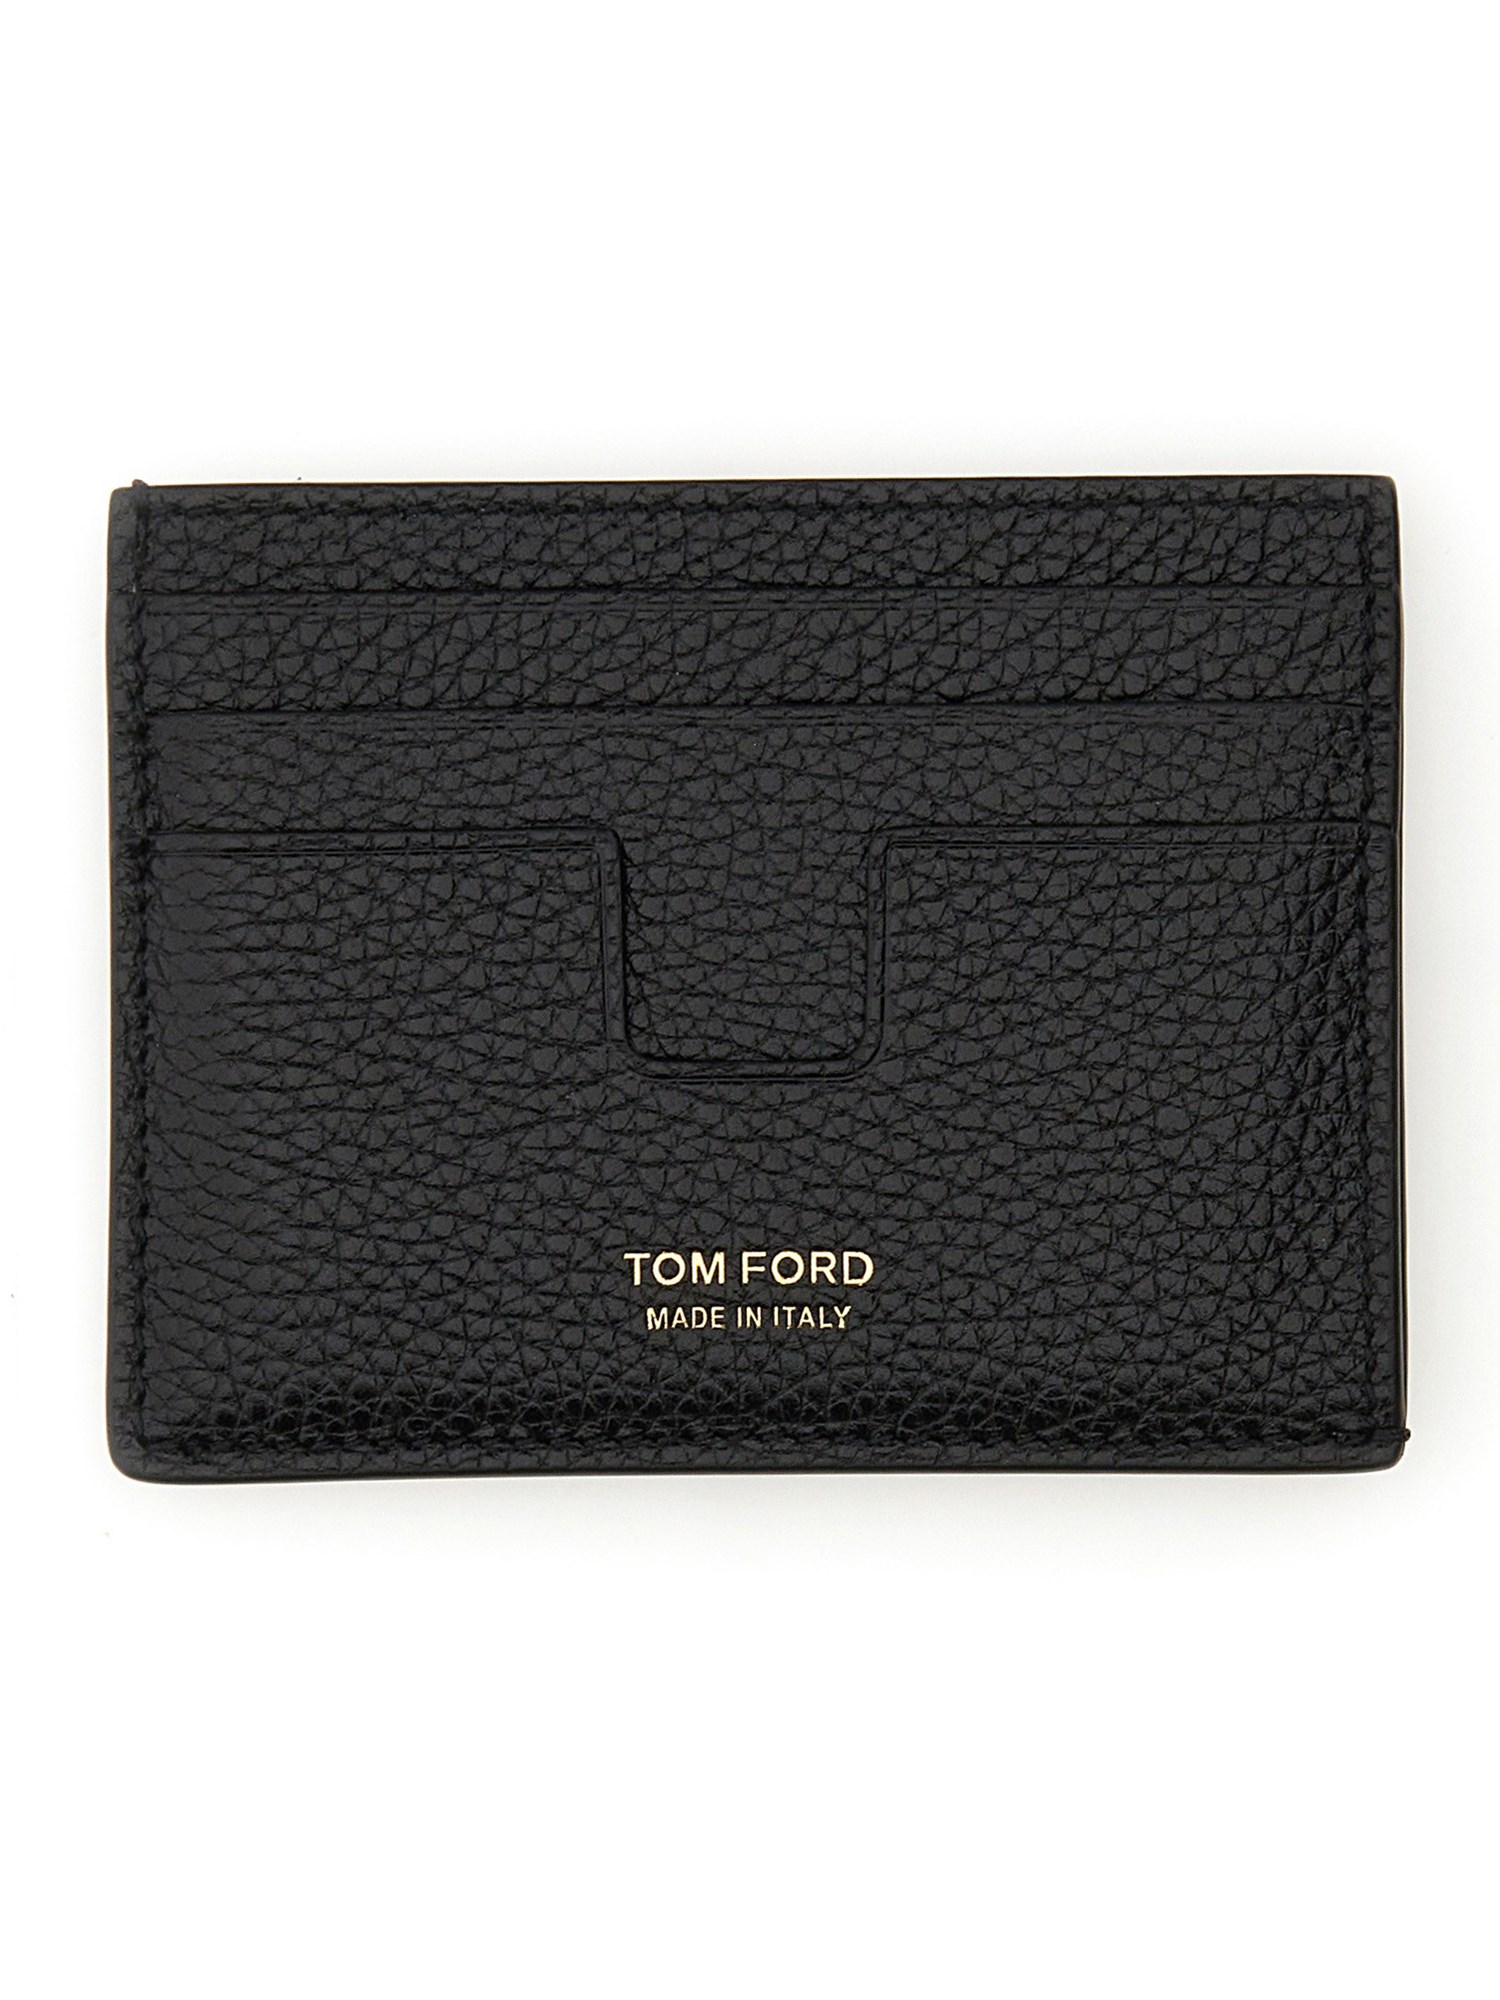 tom ford leather card holder